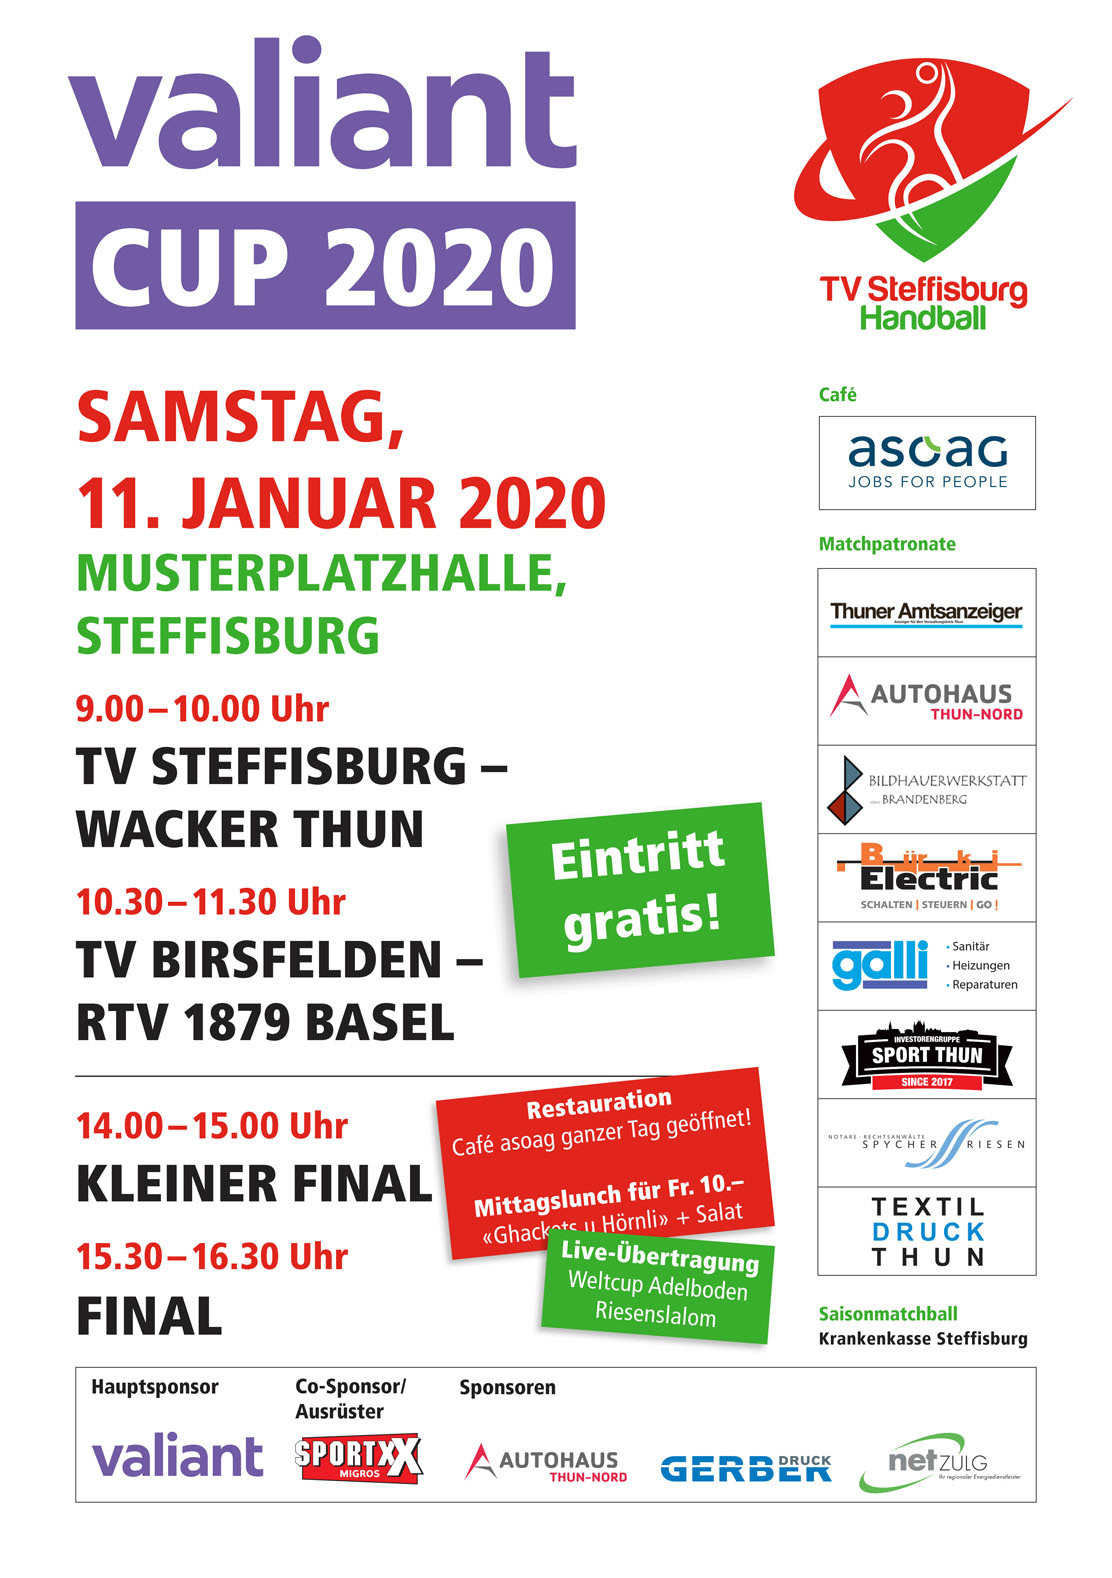 Valiant Cup 2020